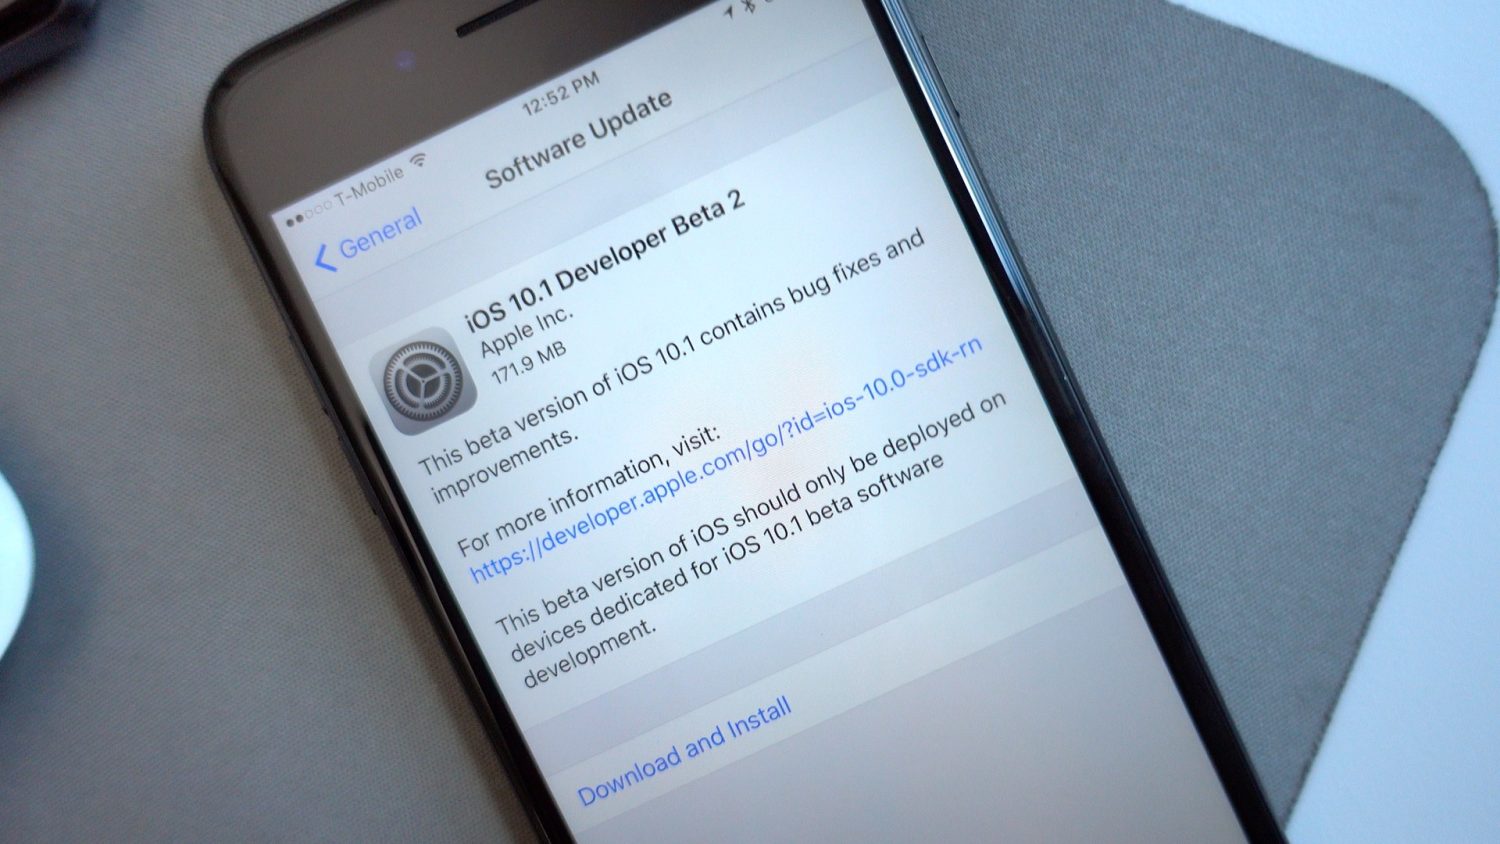 Apple ปล่อยอัปเดต iOS 10.1 beta 2 มีอะไรใหม่ มาดูกัน